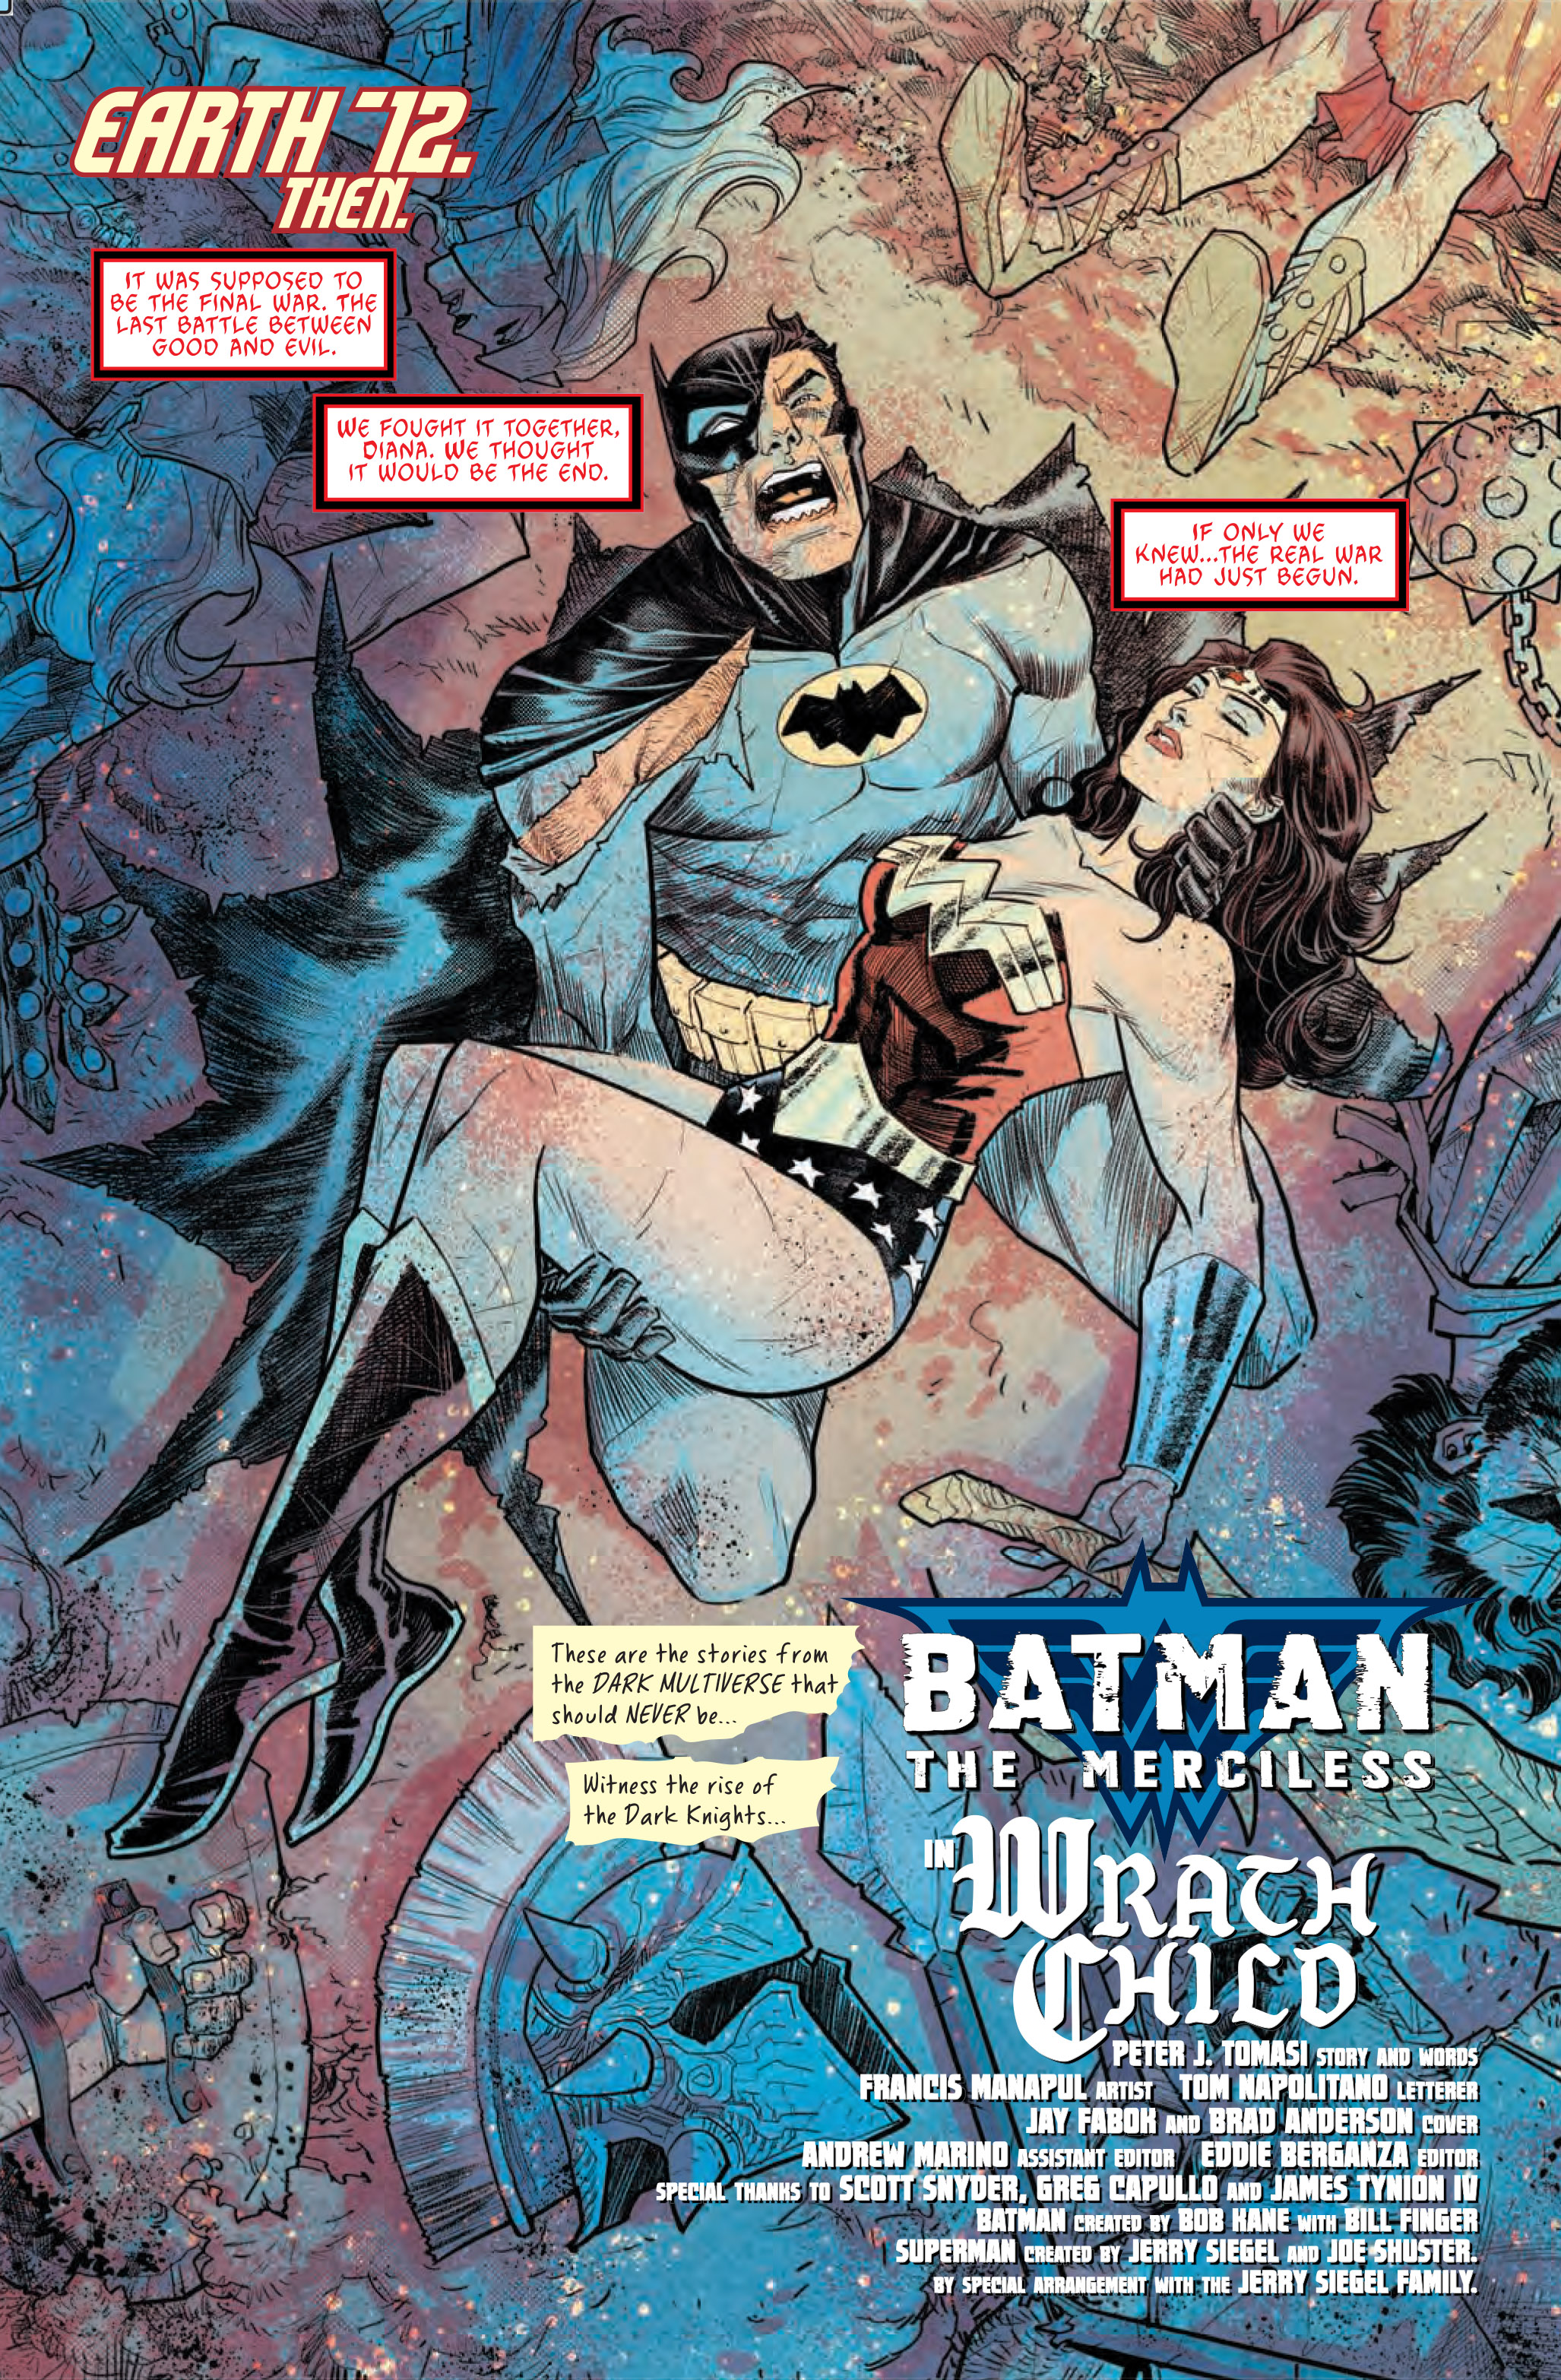 Batman: The Merciless #1 page 1